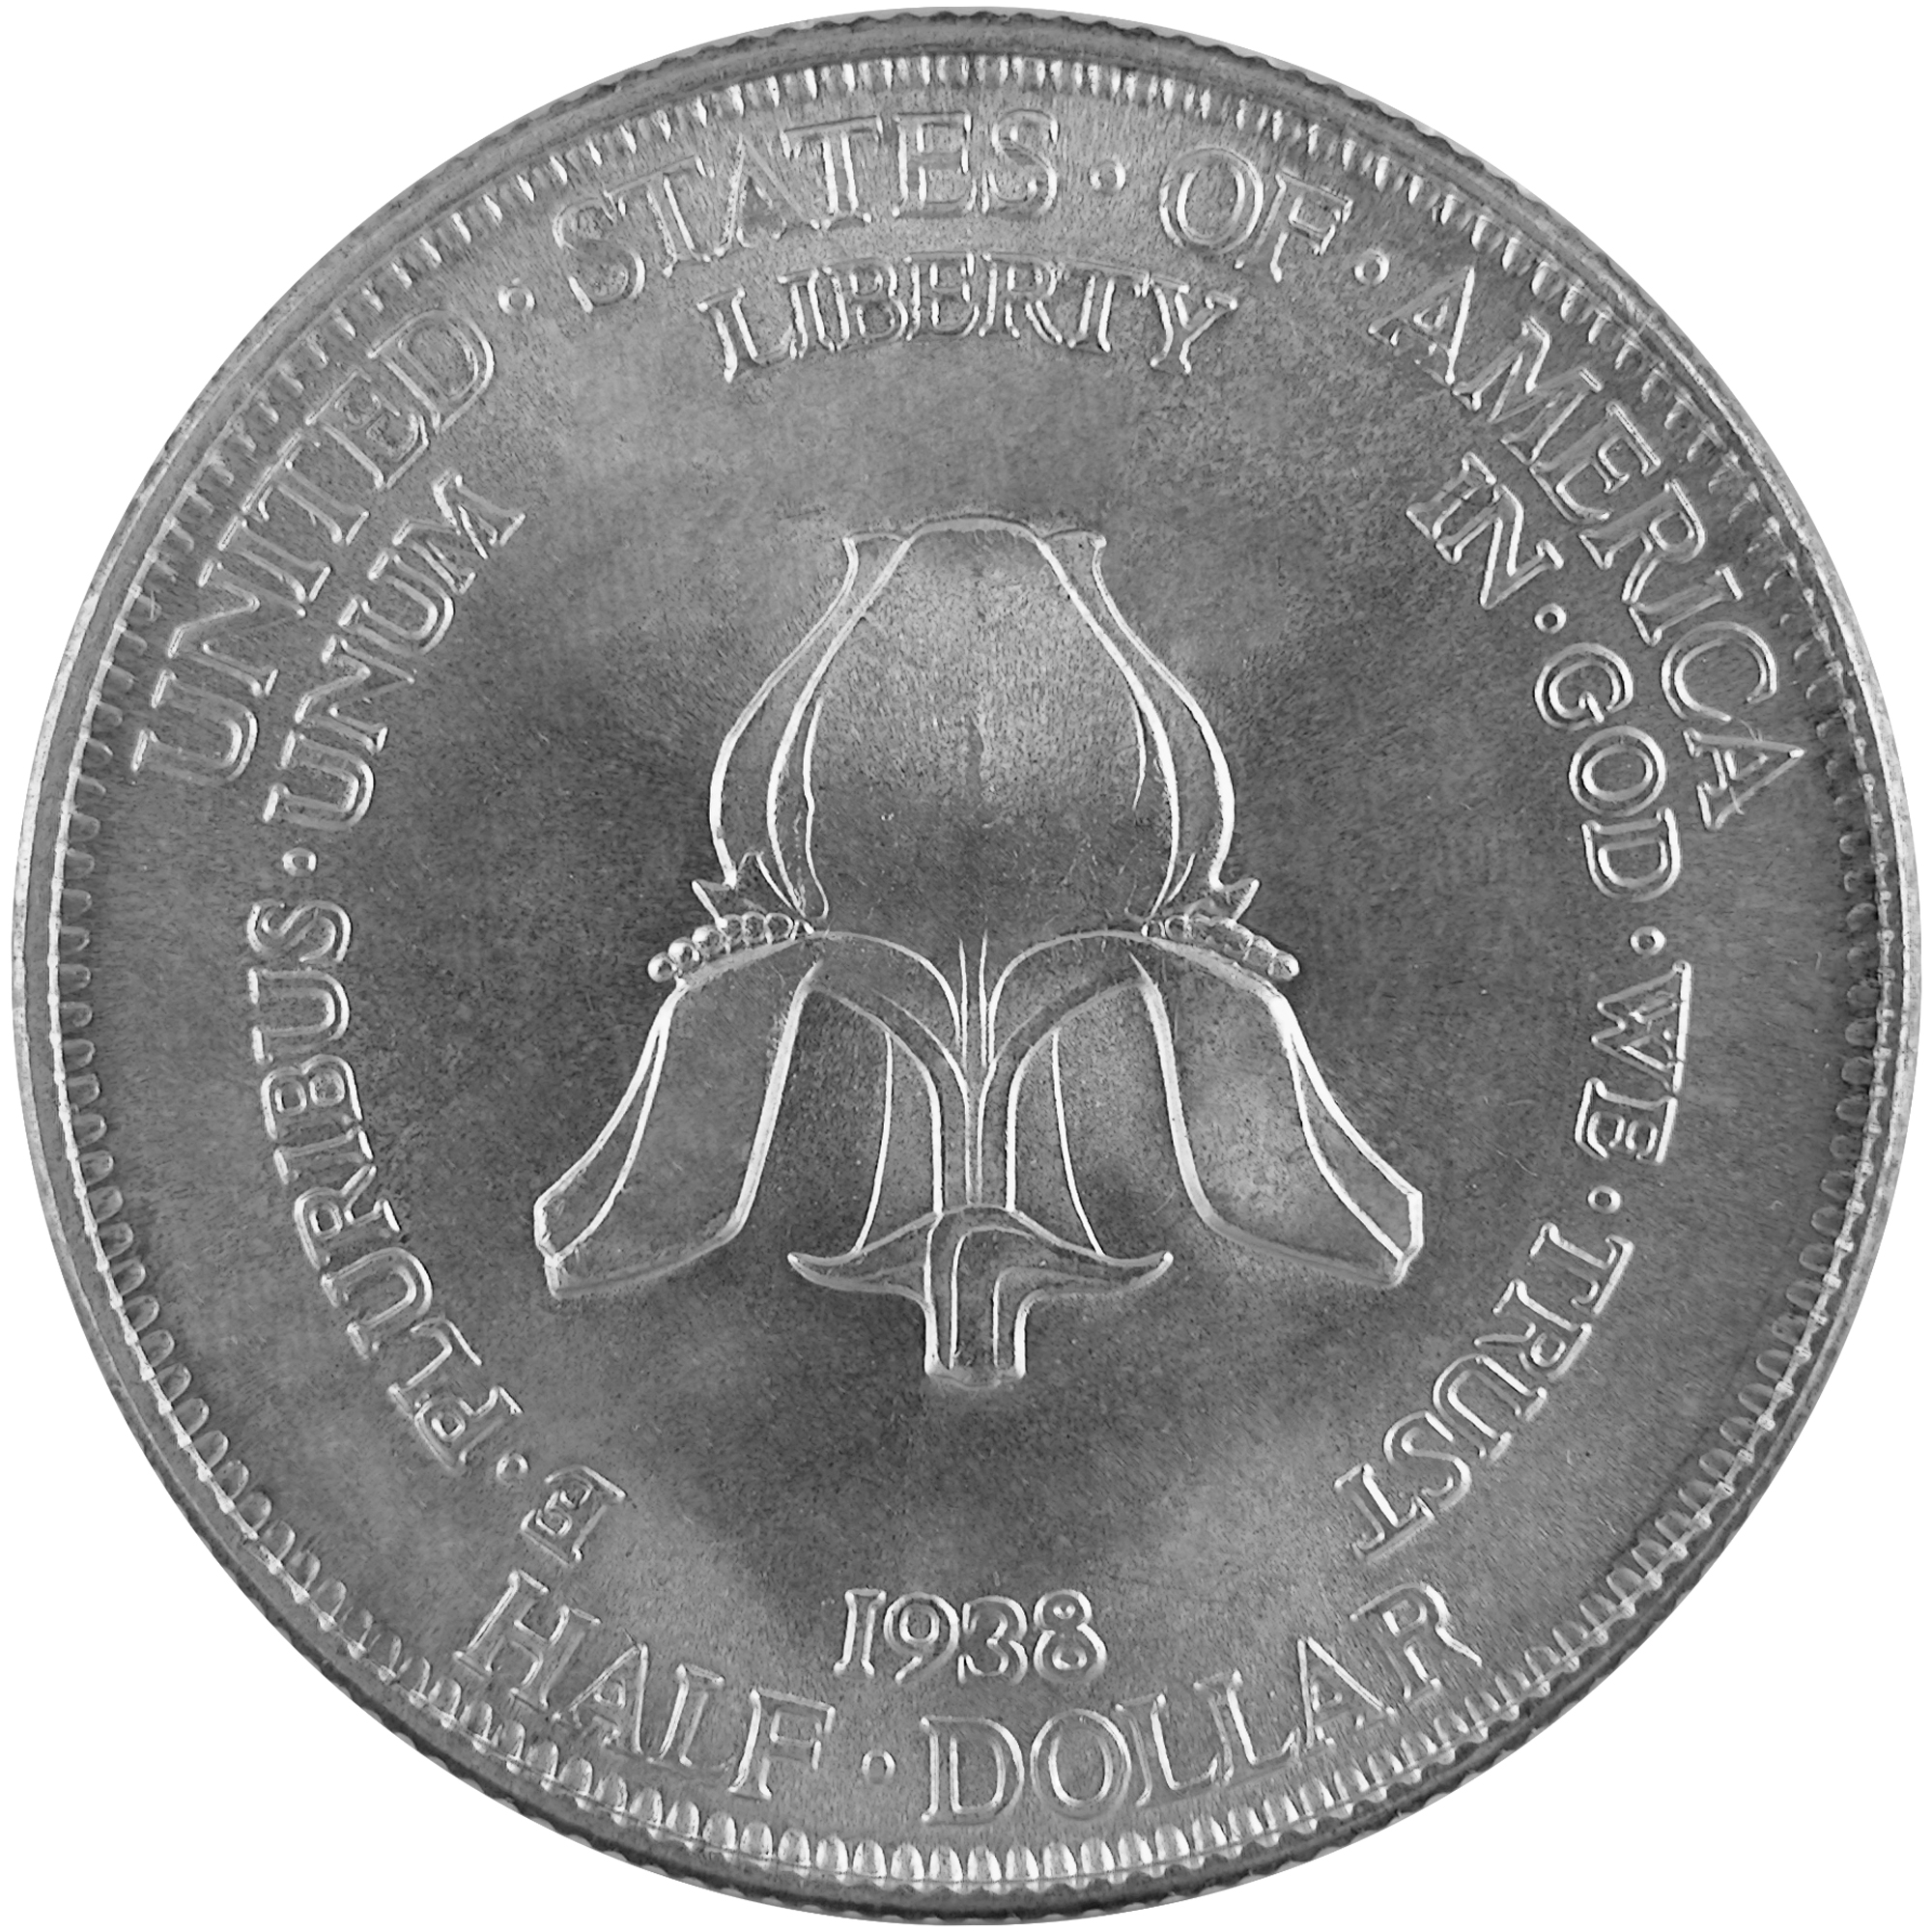 1938 New Rochelle New York Commemorative Silver Half Dollar Coin Reverse